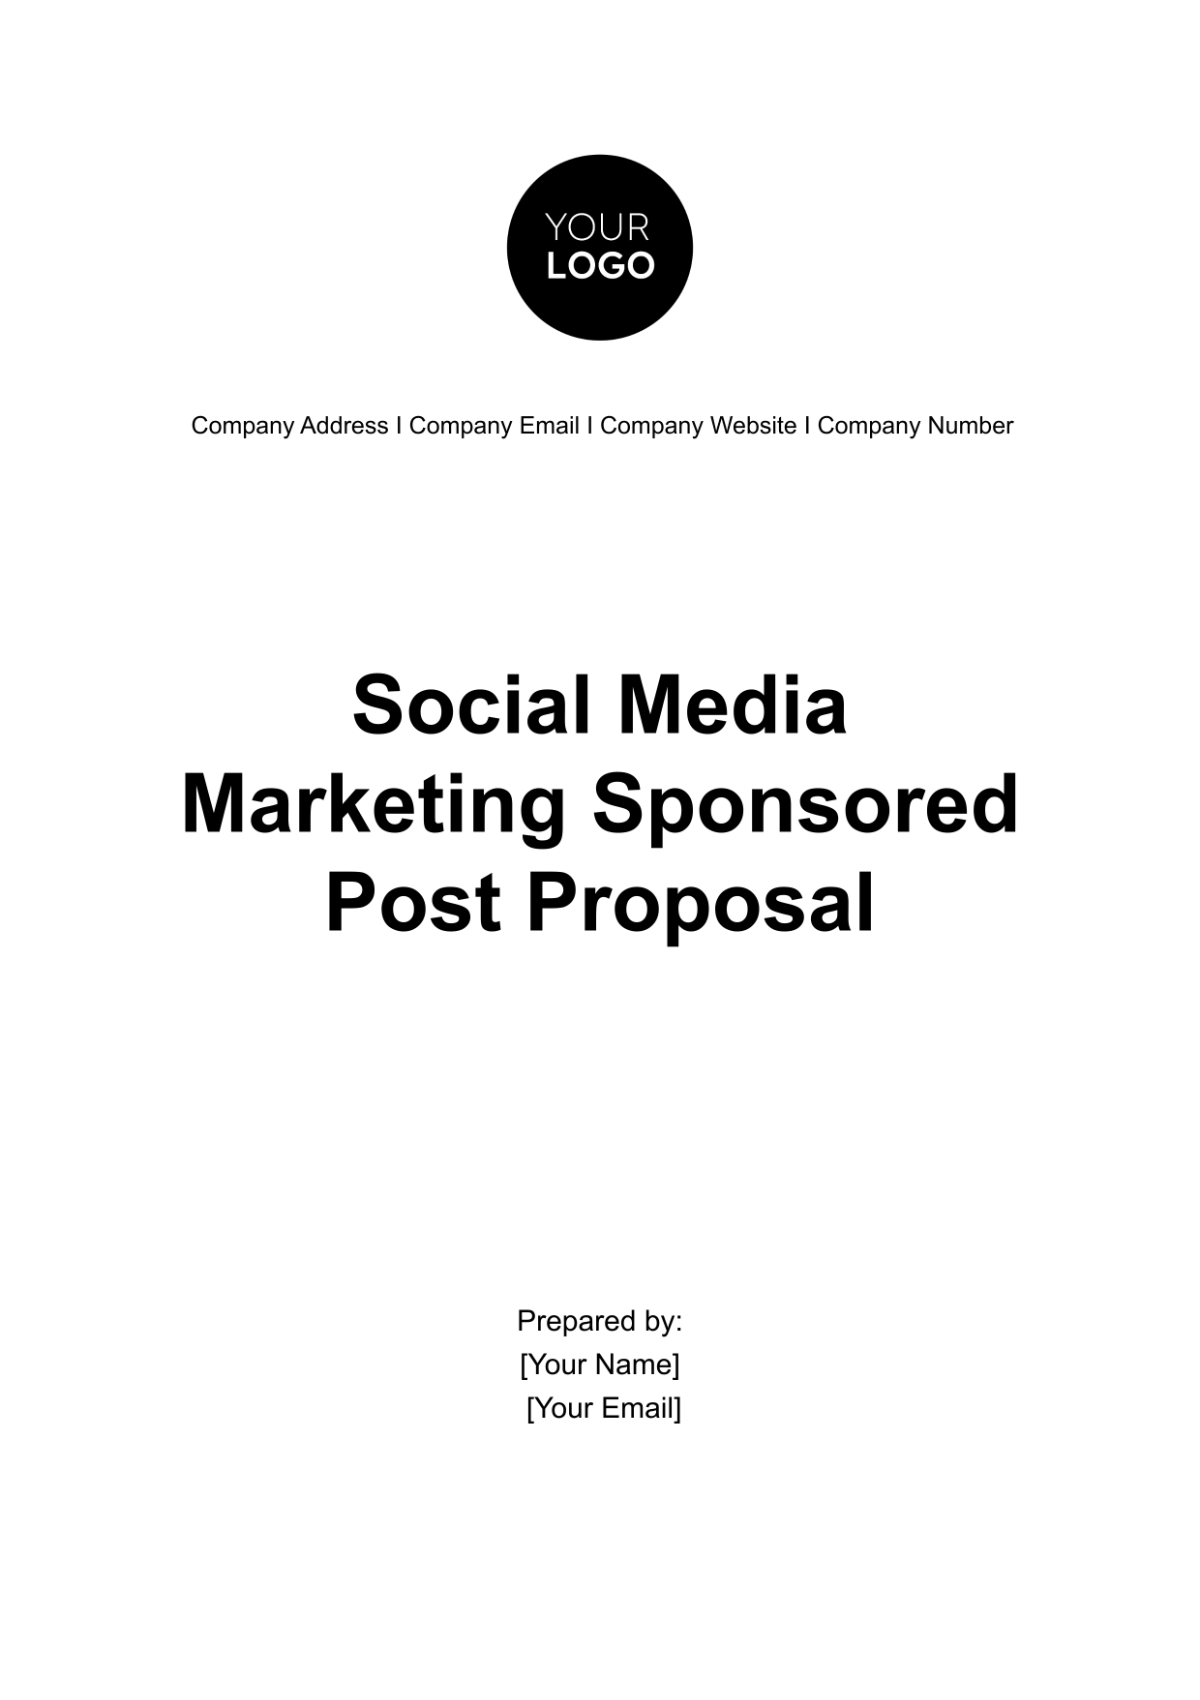 Social Media Marketing Sponsored Post Proposal Template